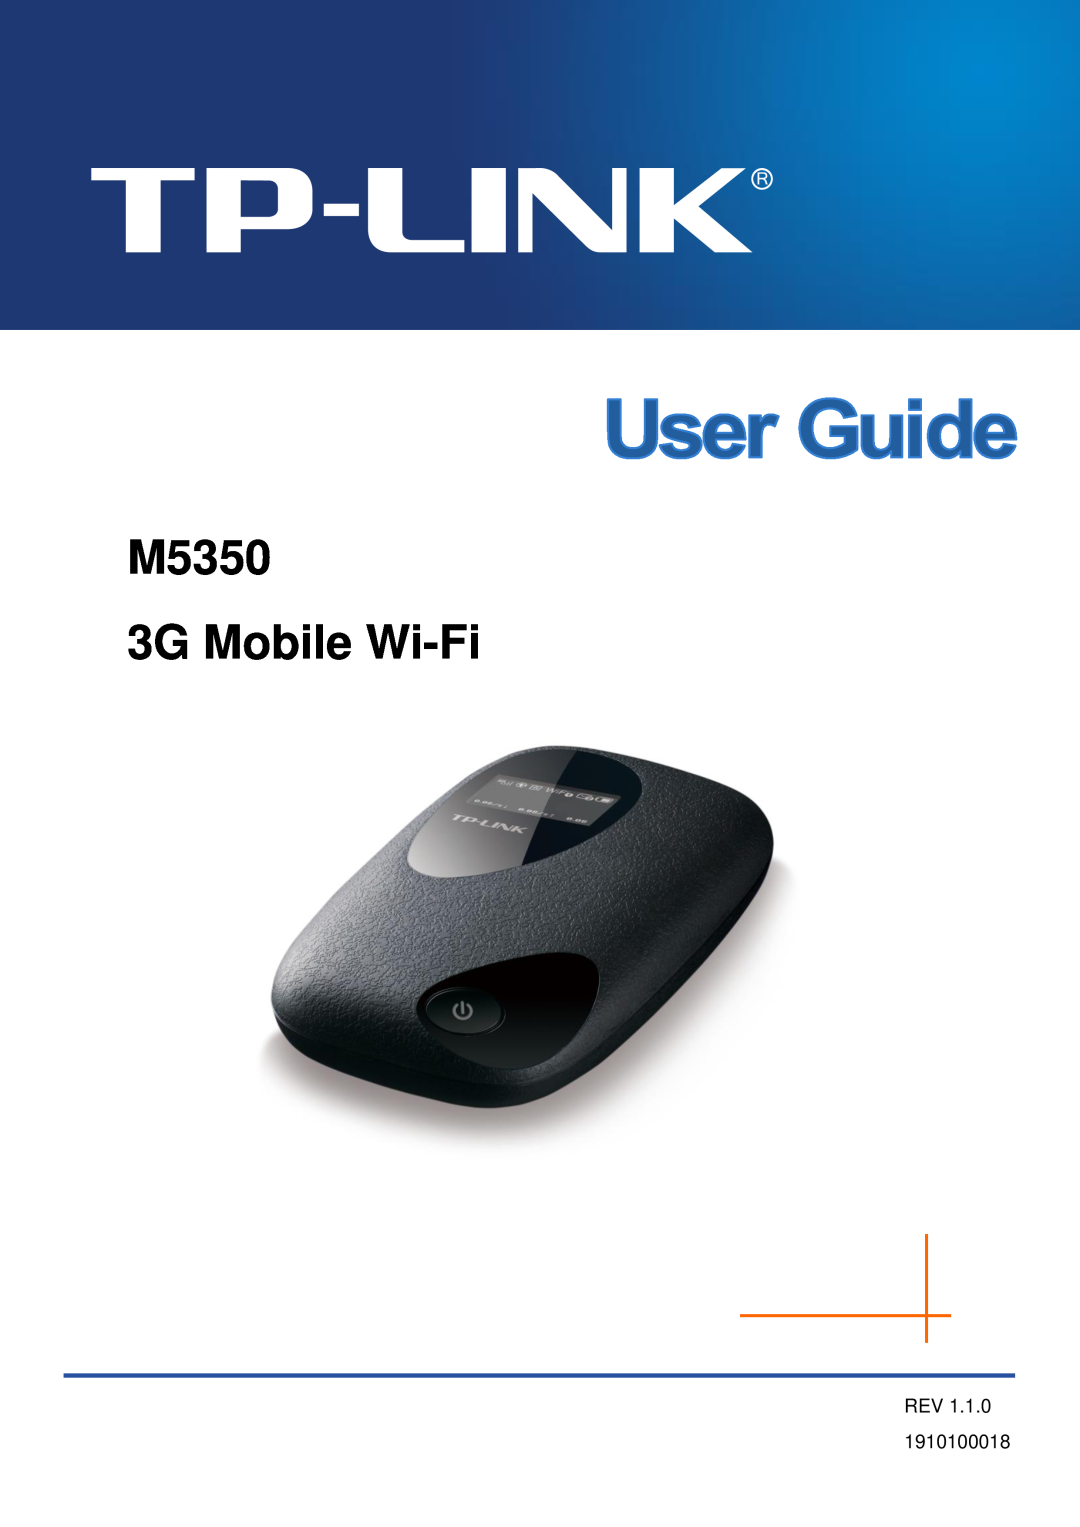 TP-Link manual M5350 3G Mobile Wi-Fi, REV 1910100018 